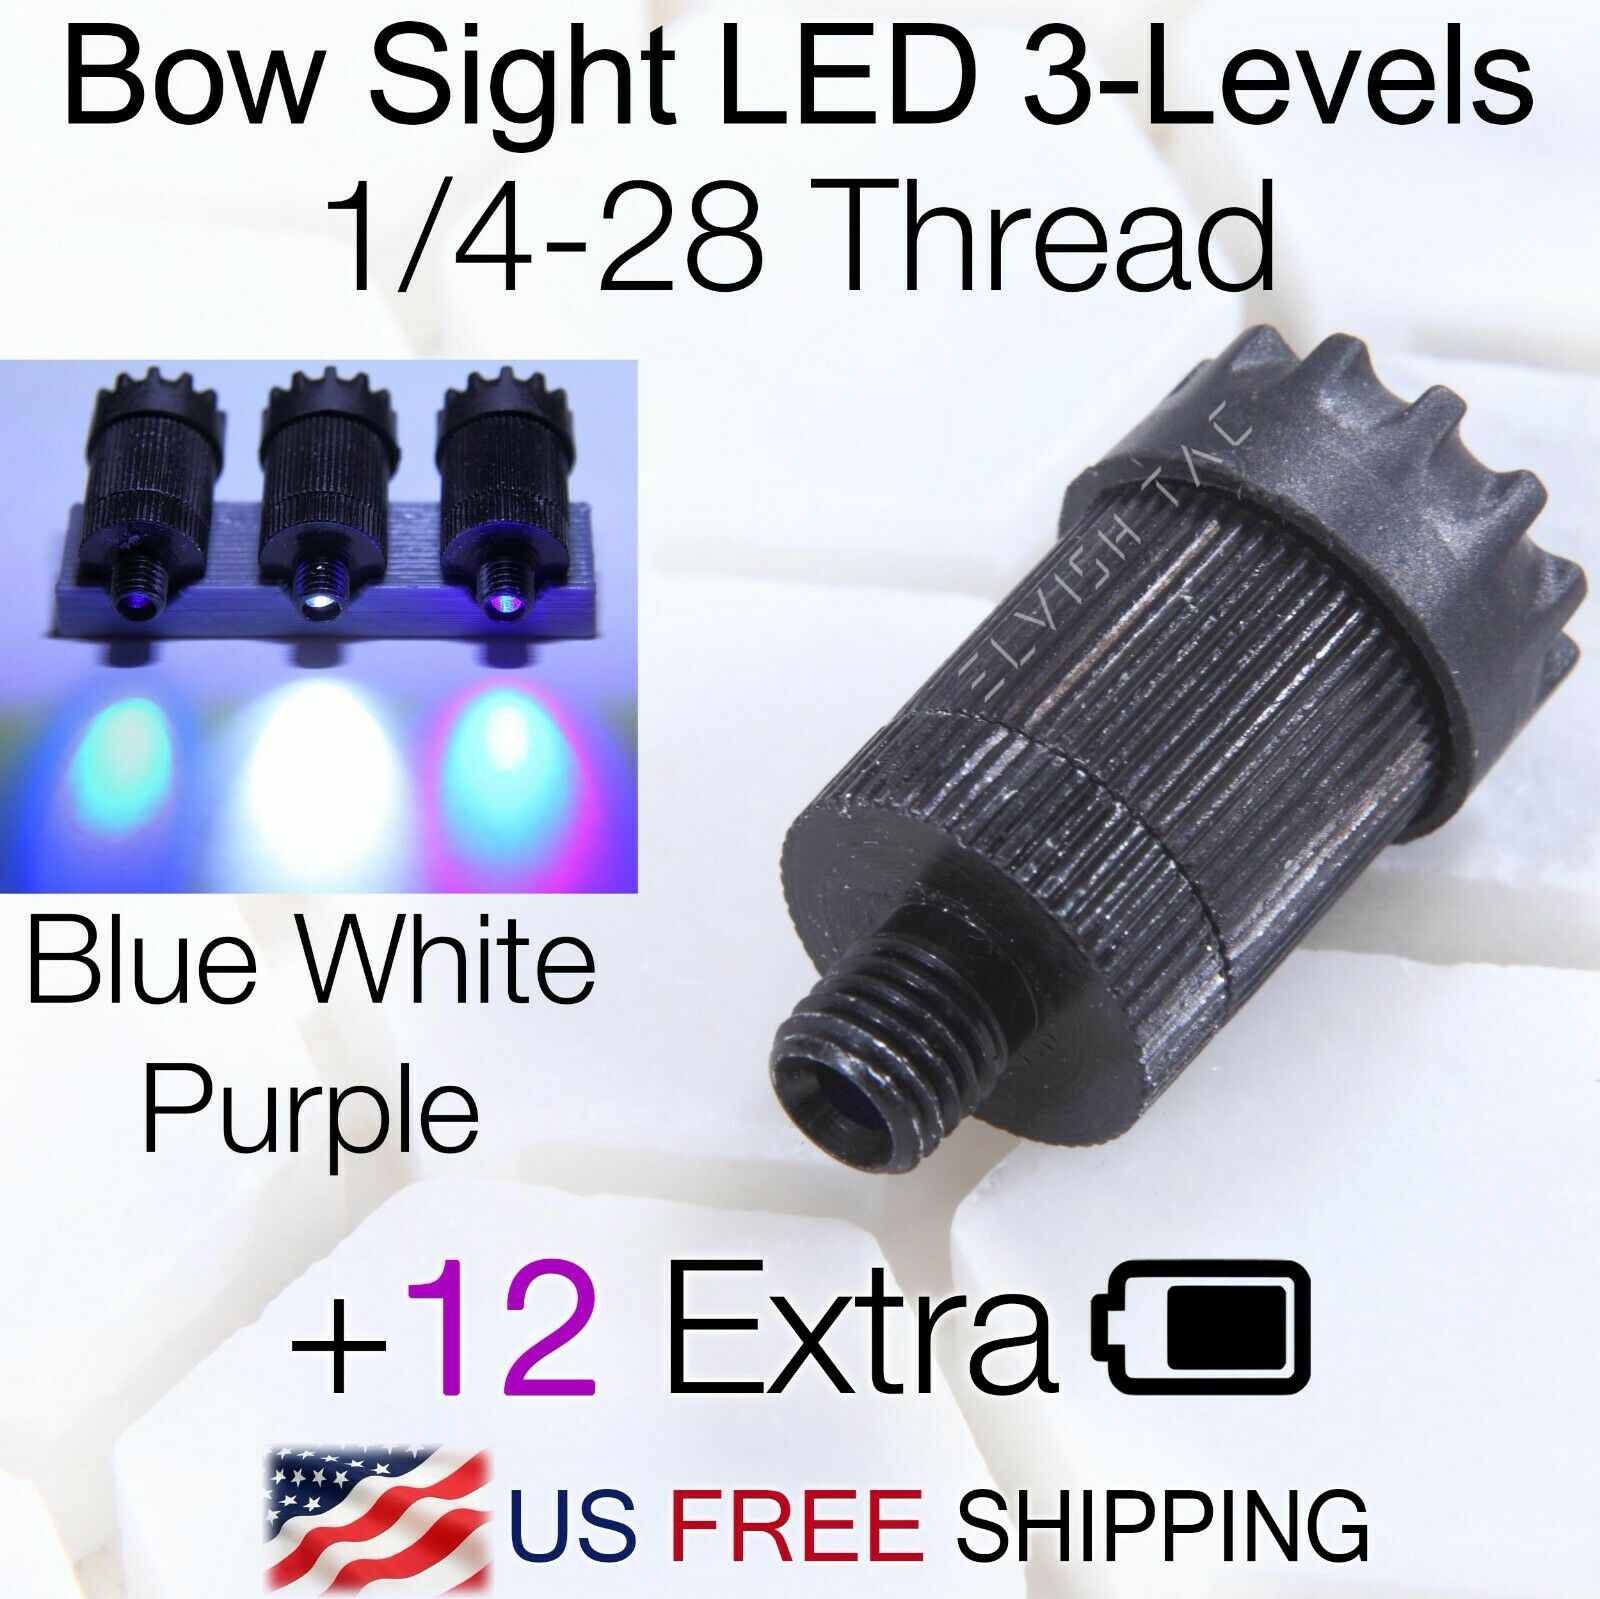 Compound Bow Sight Light Bowlight Uv Led 3-levels Rheostat Adjustable 1/4-28 Cbe